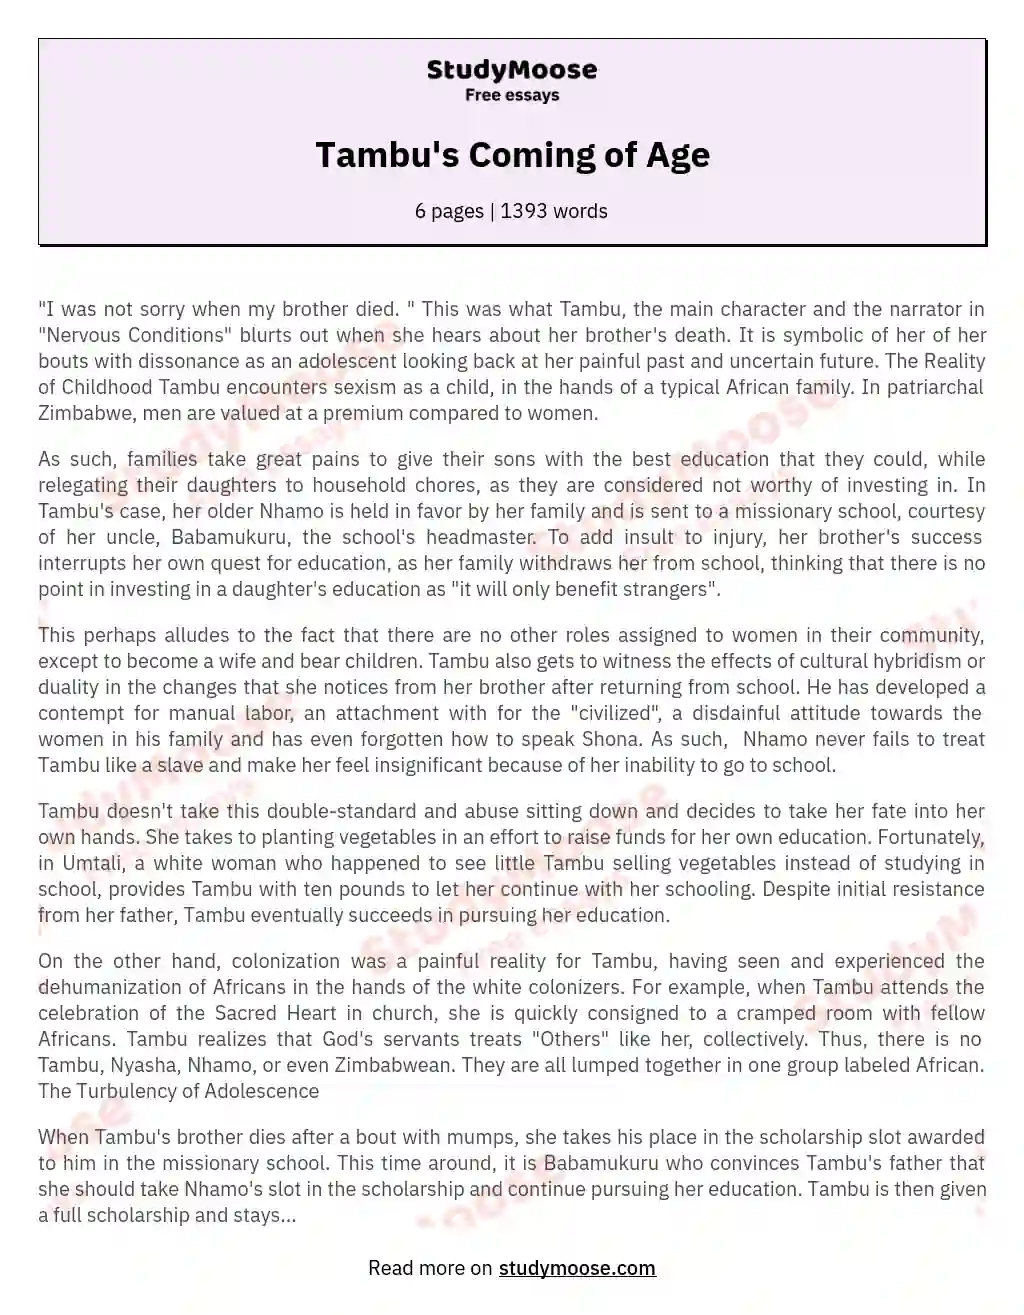 Tambu's Coming of Age essay